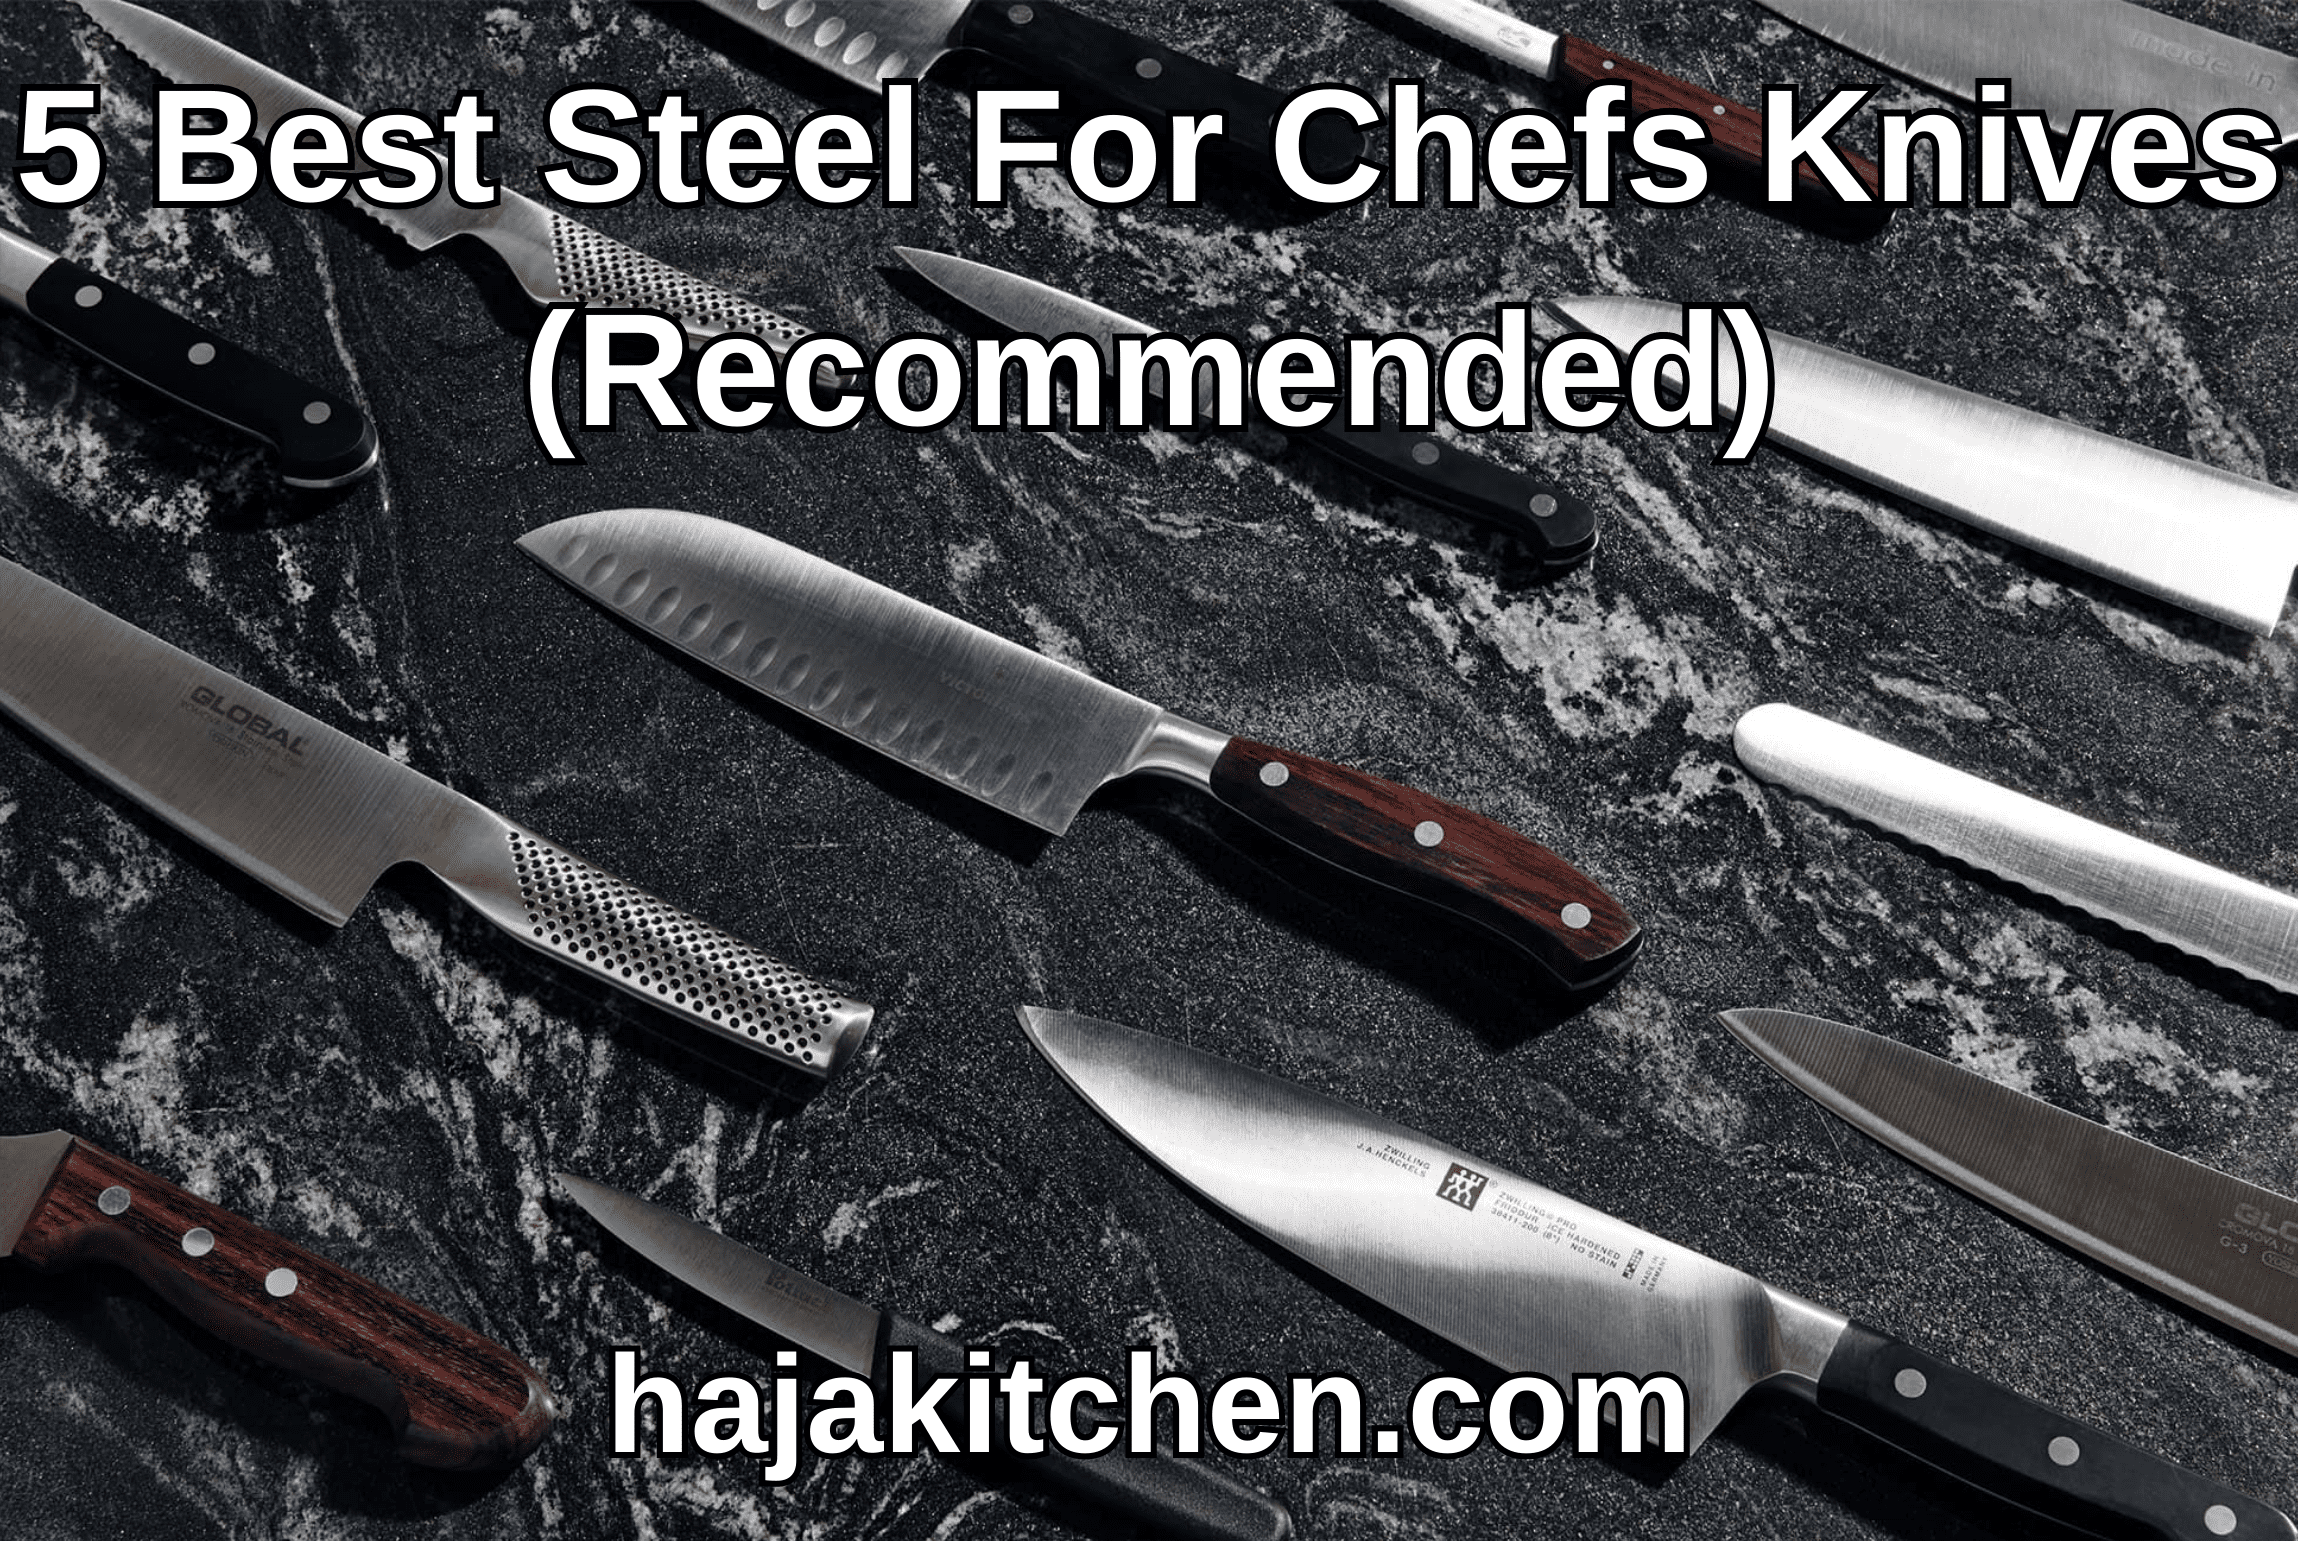 5 Best Steel For Chefs Knives